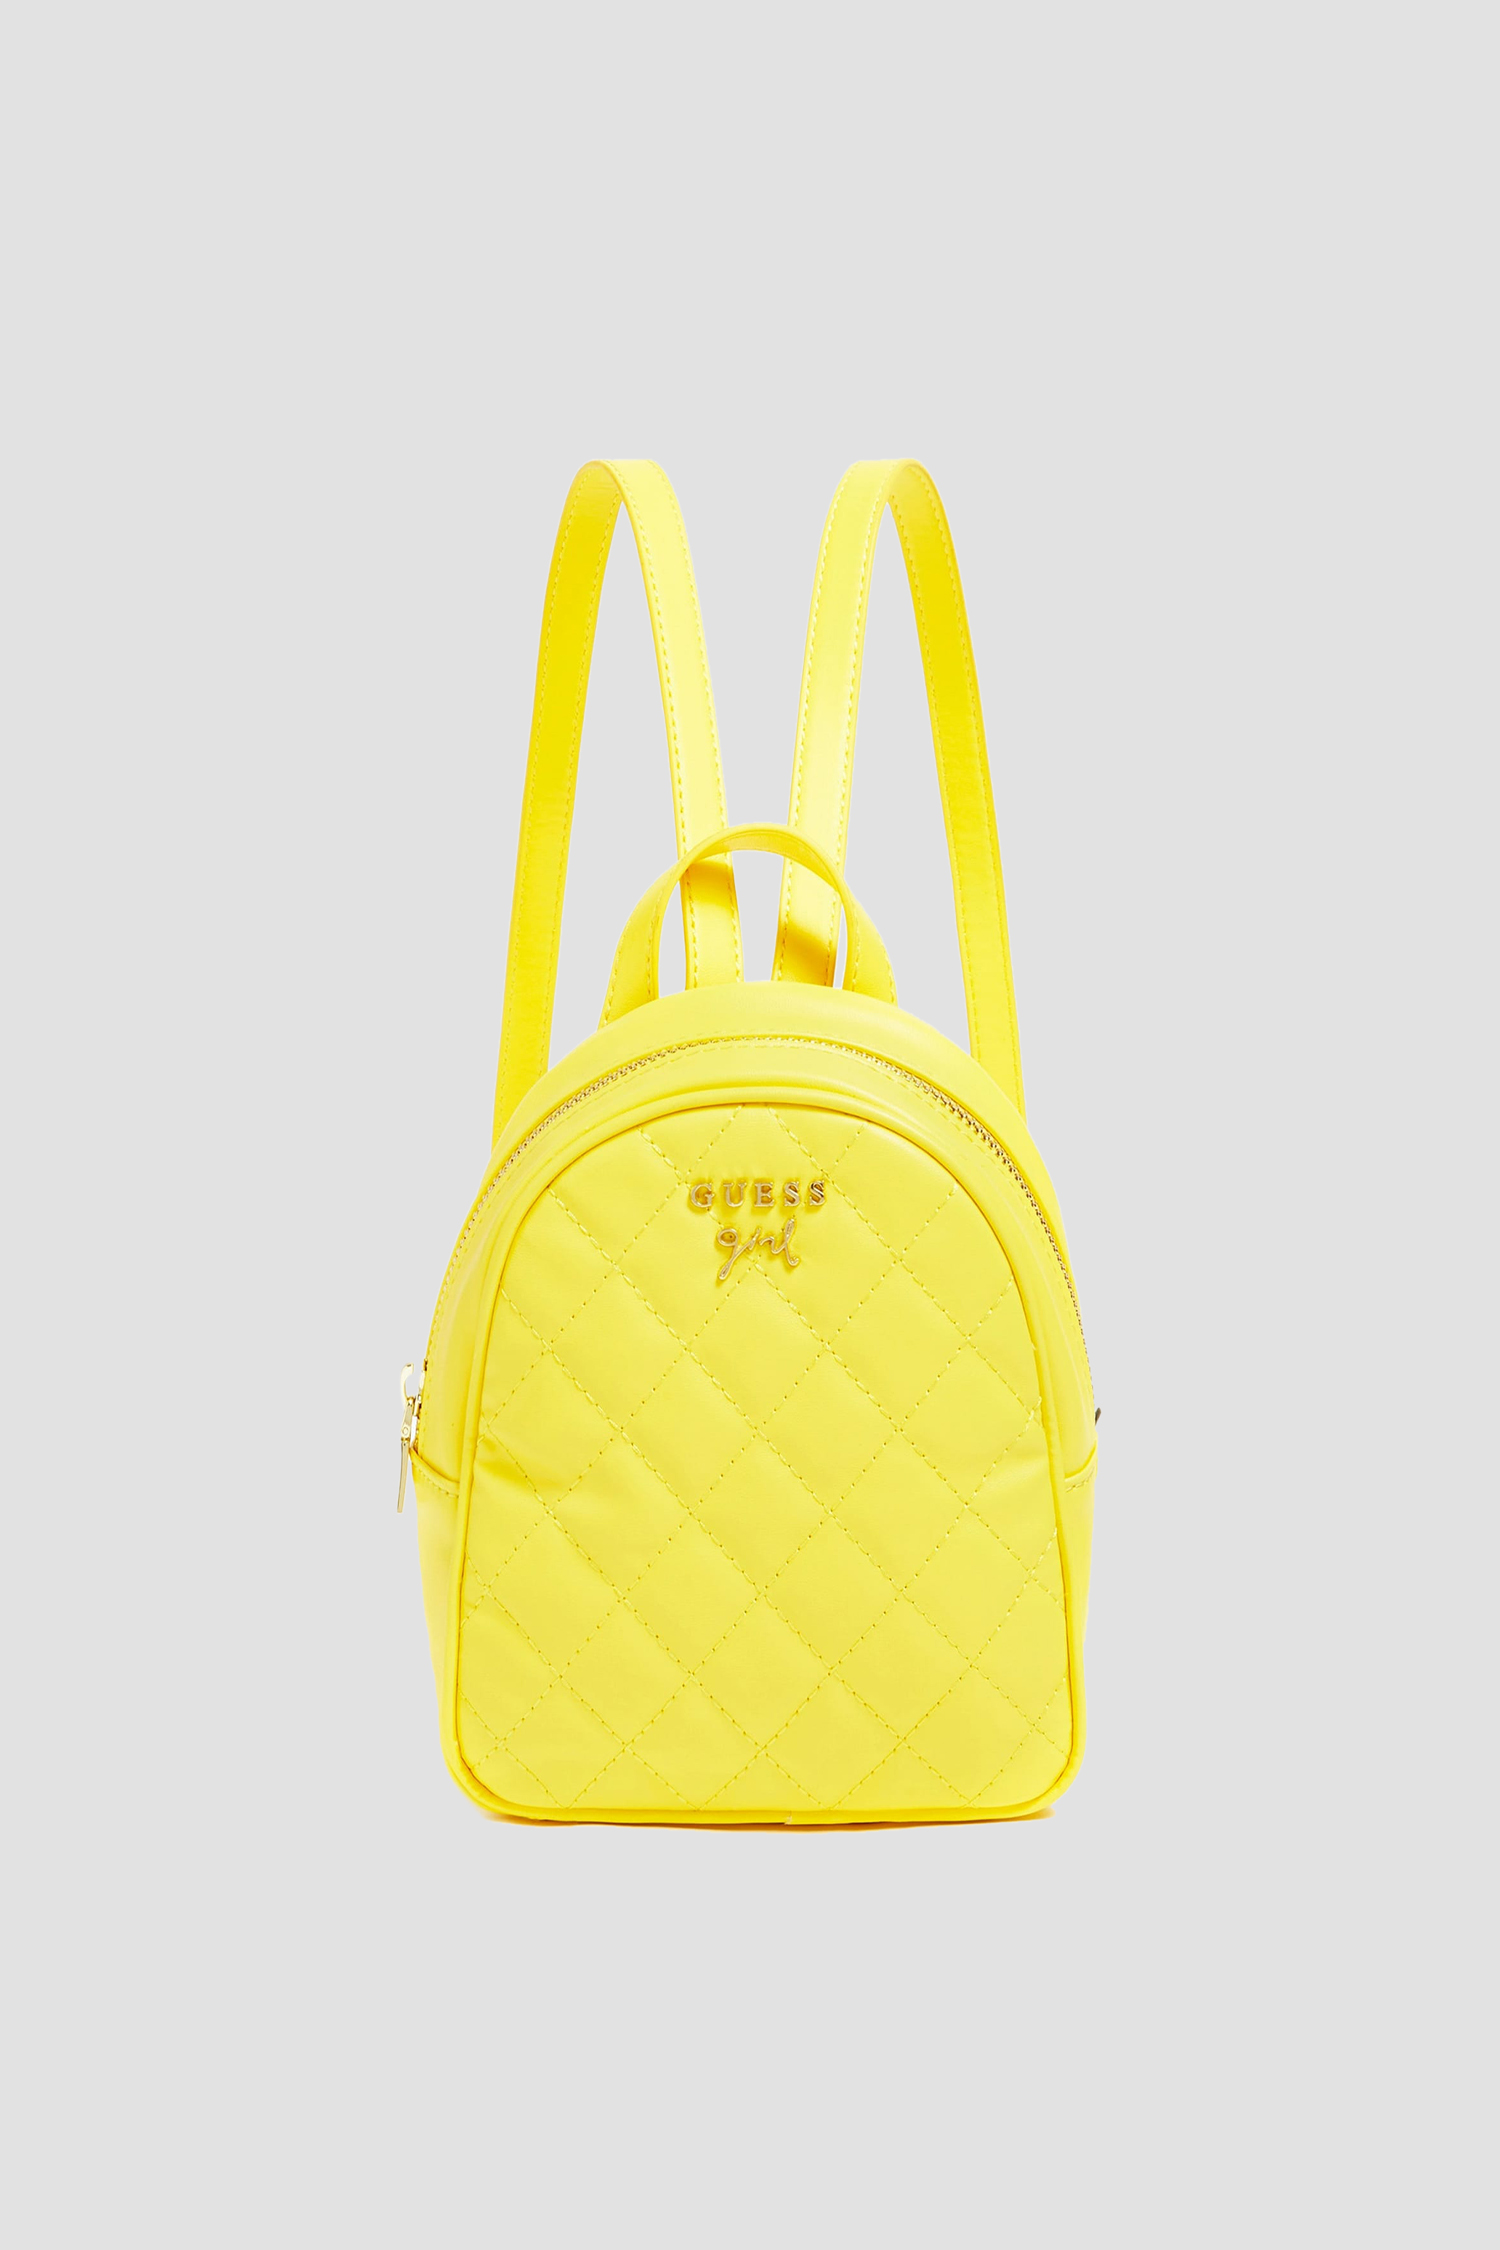 Детский желтый рюкзак Guеss Kids HGNOV1.CO223;YELLO